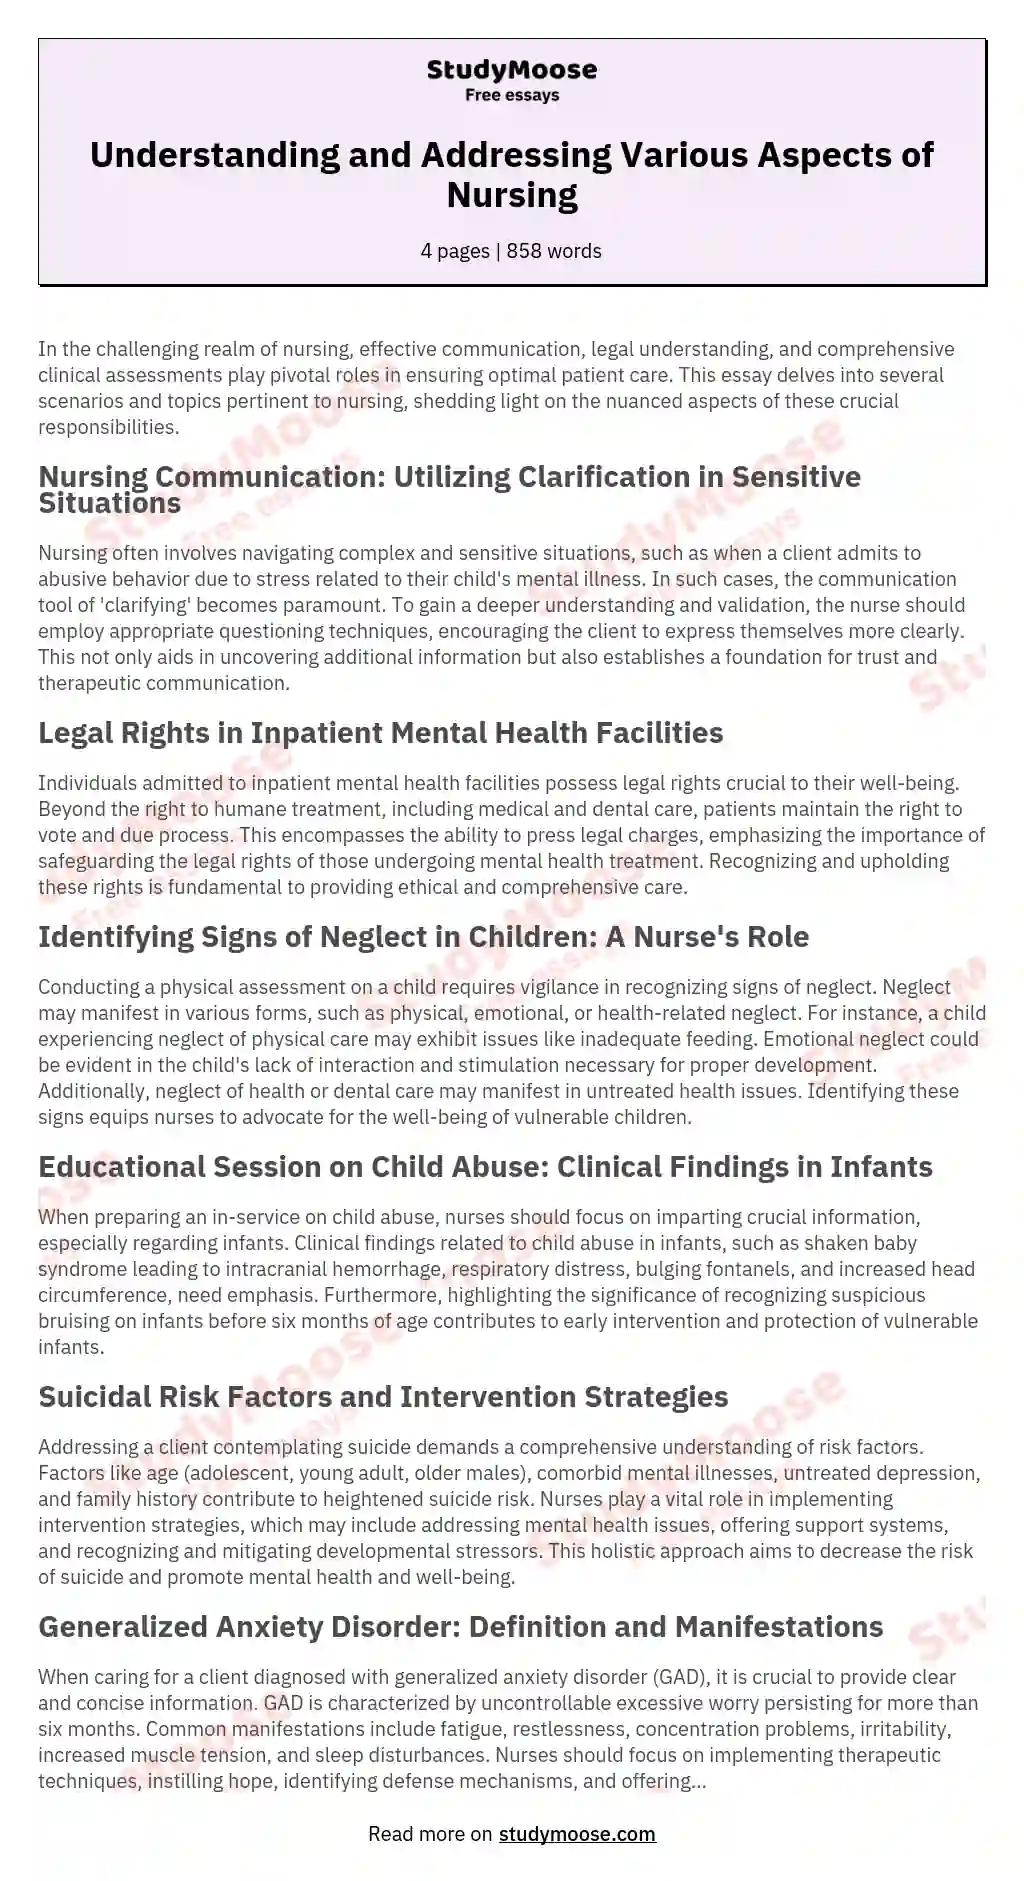 Understanding and Addressing Various Aspects of Nursing essay